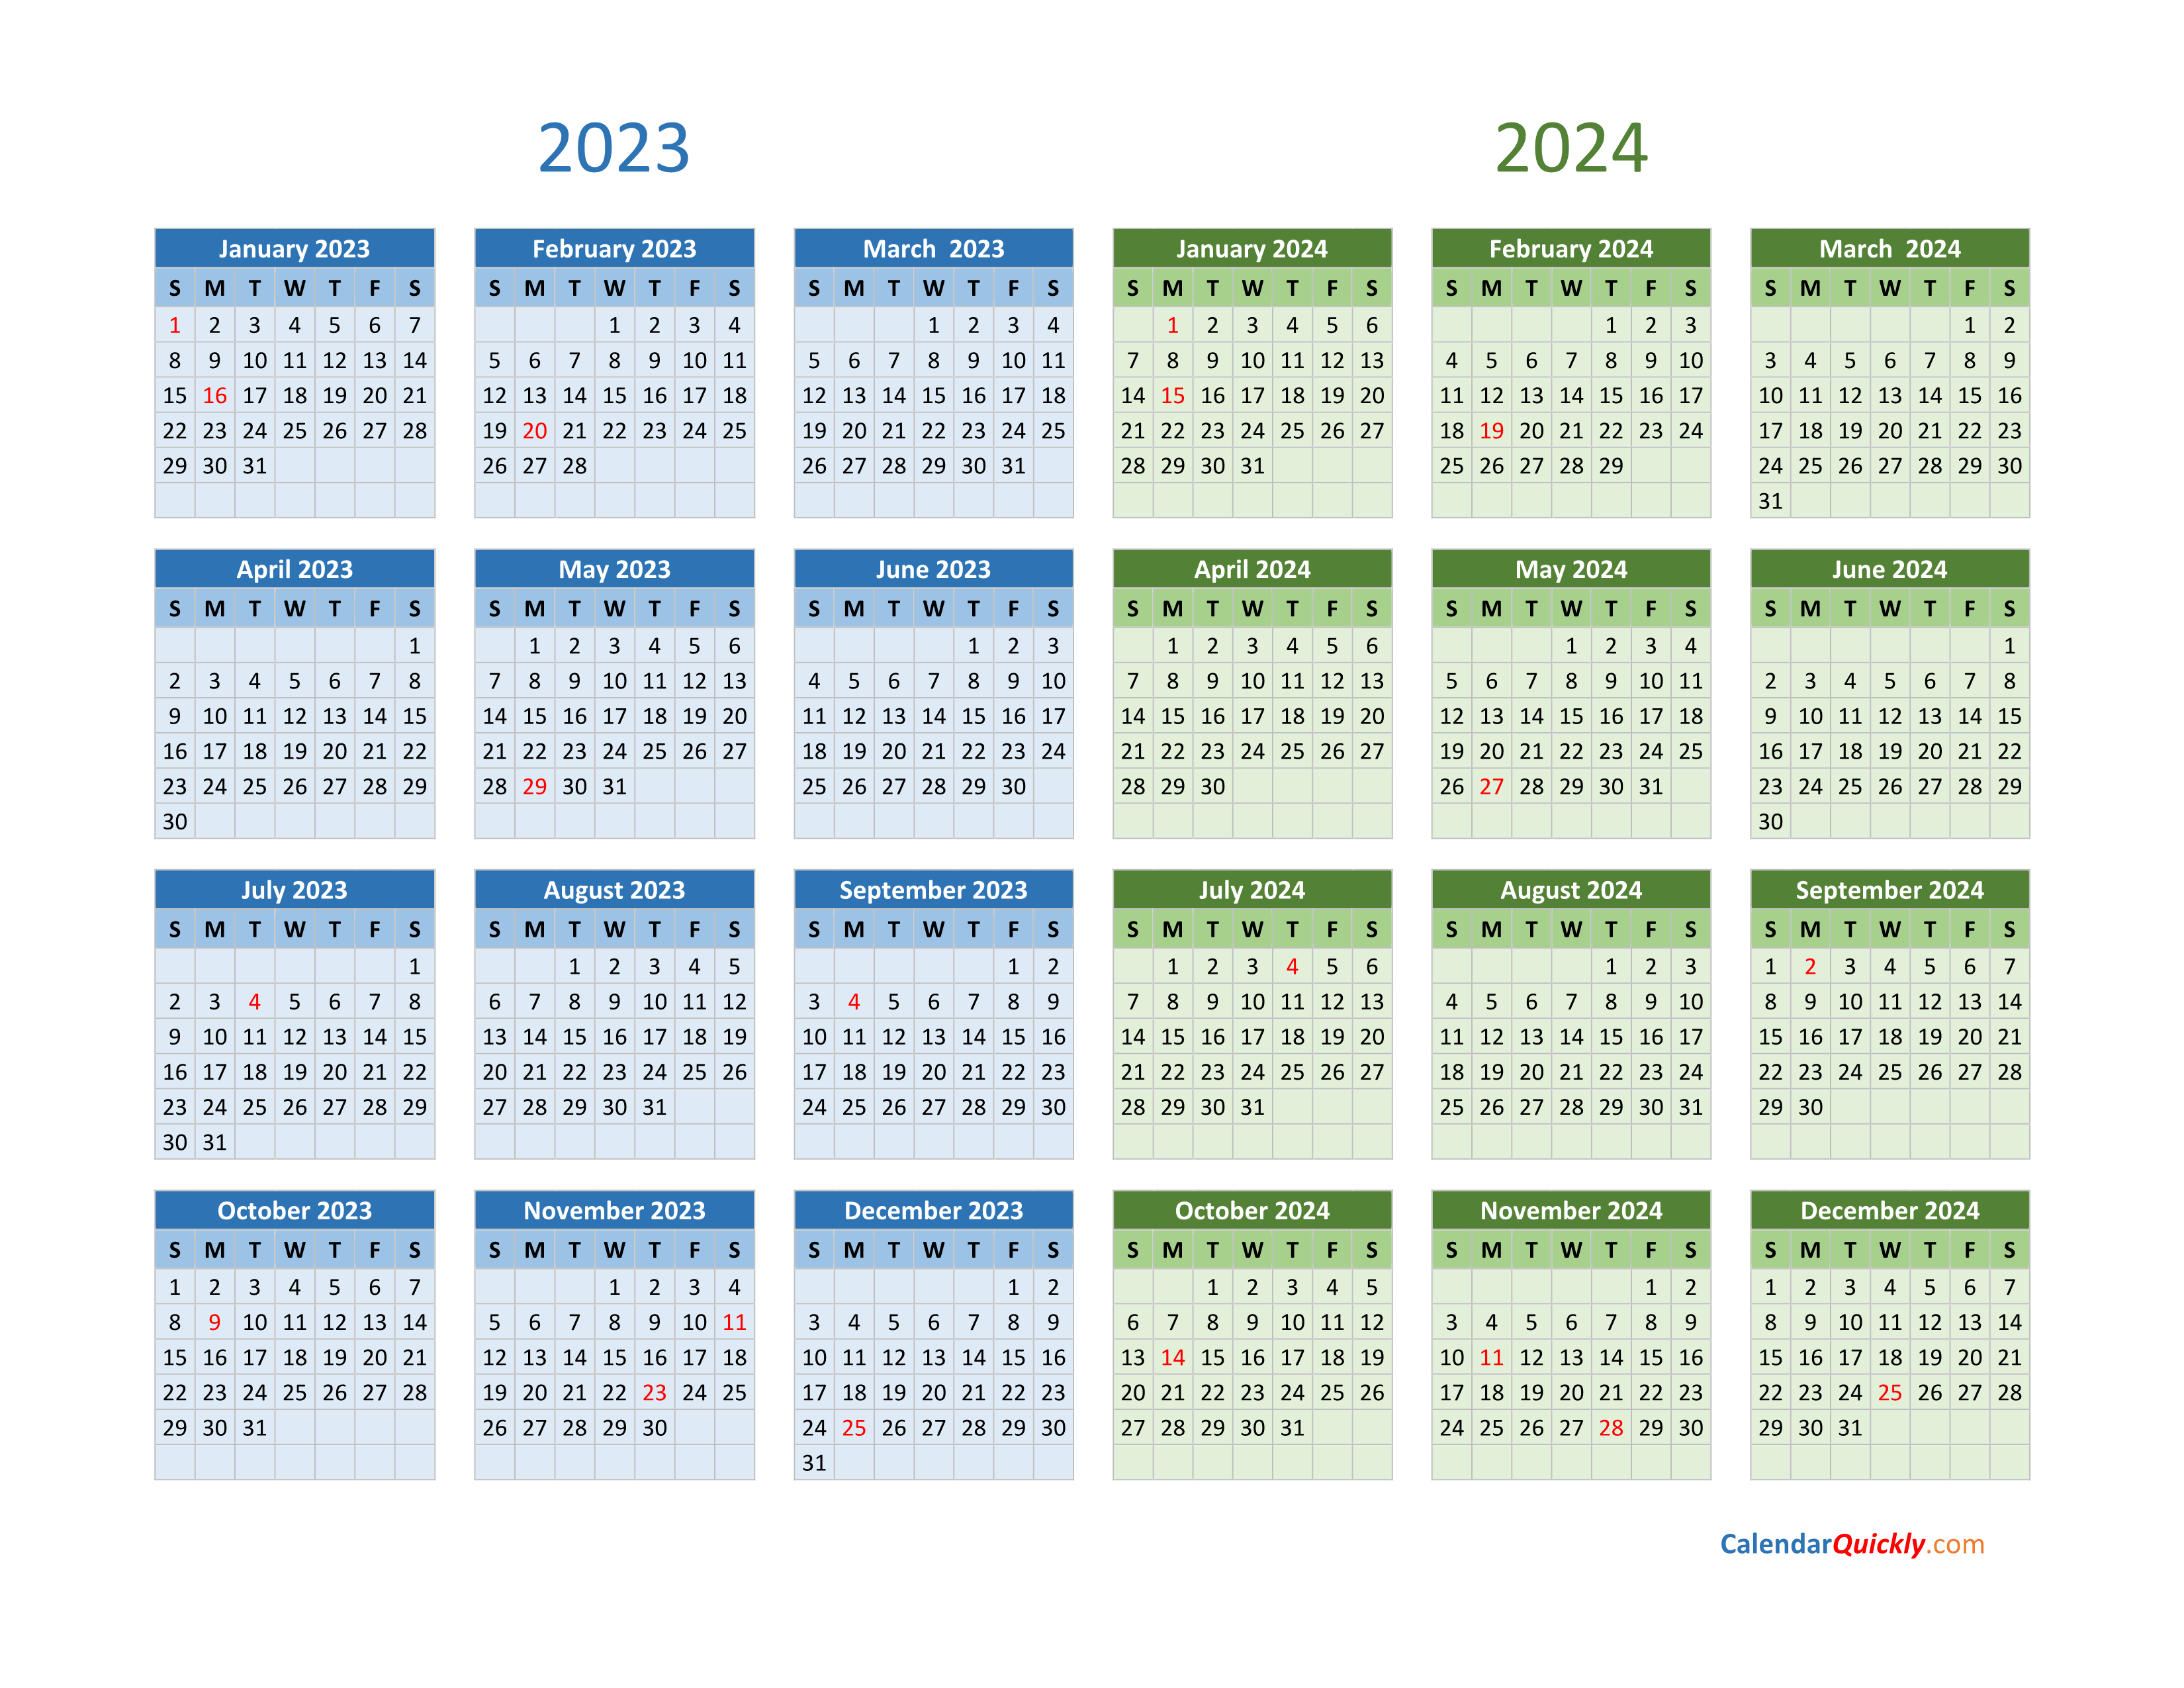 2023 and 2024 Calendar Calendar Quickly